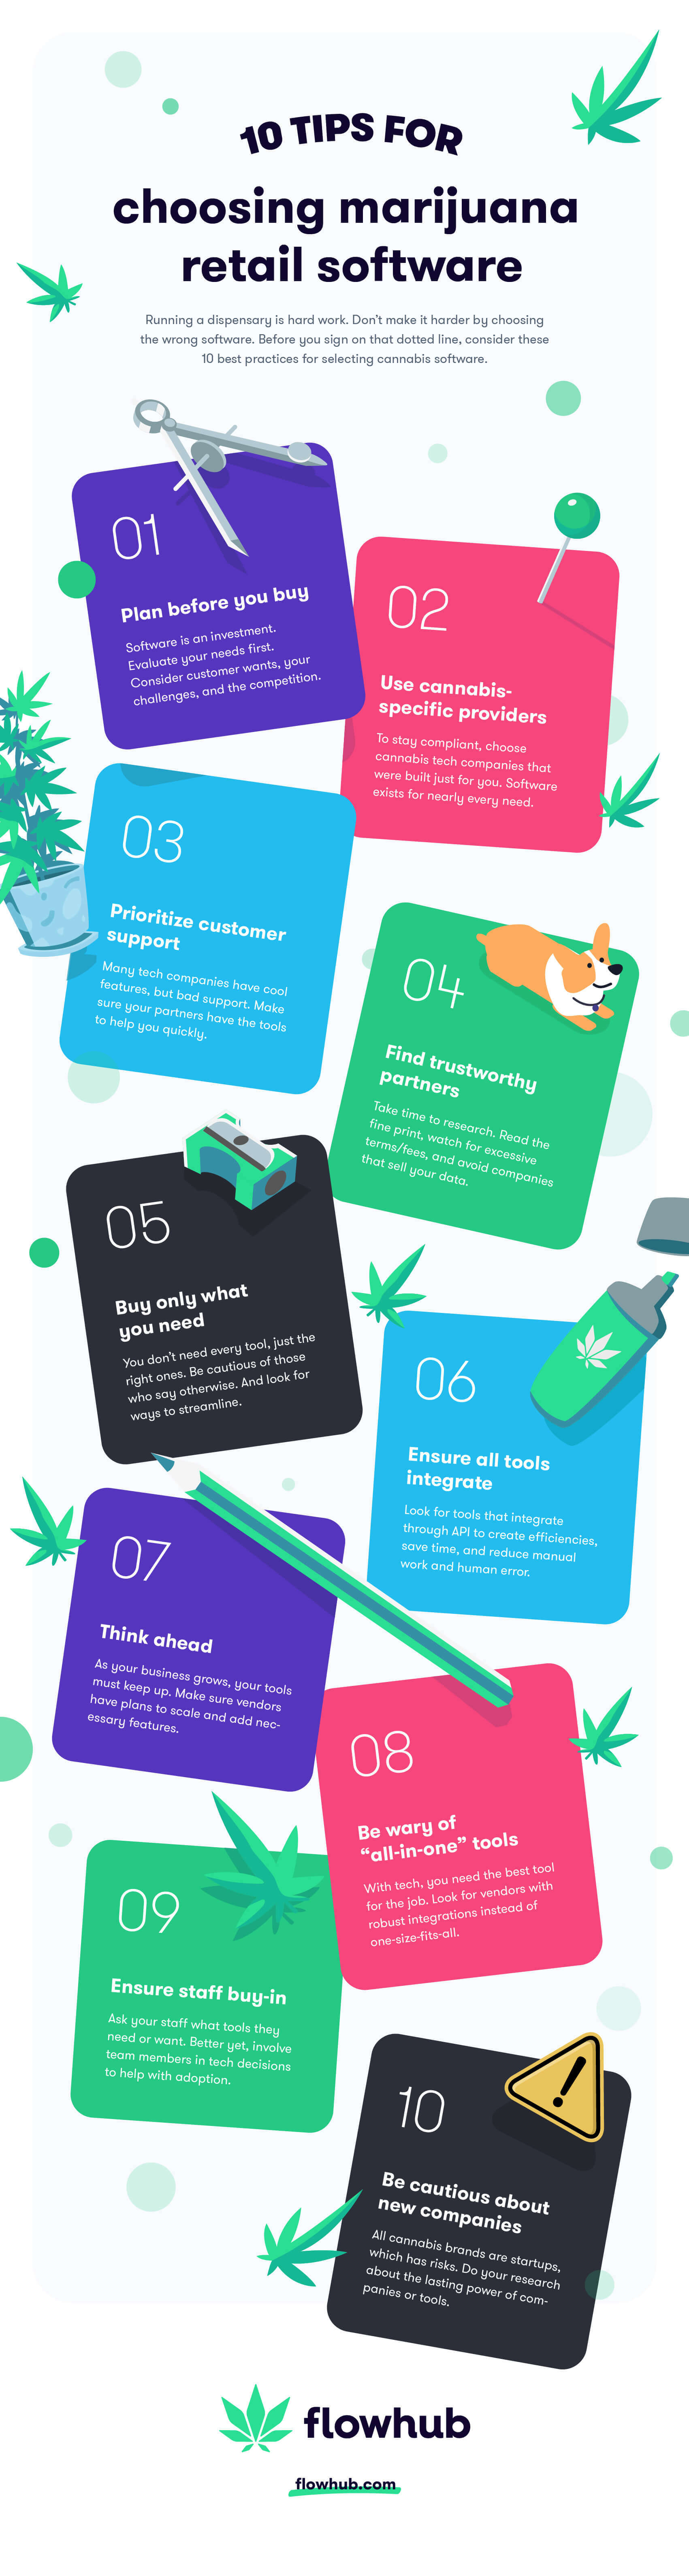 10 tips for choosing marijuana retail software